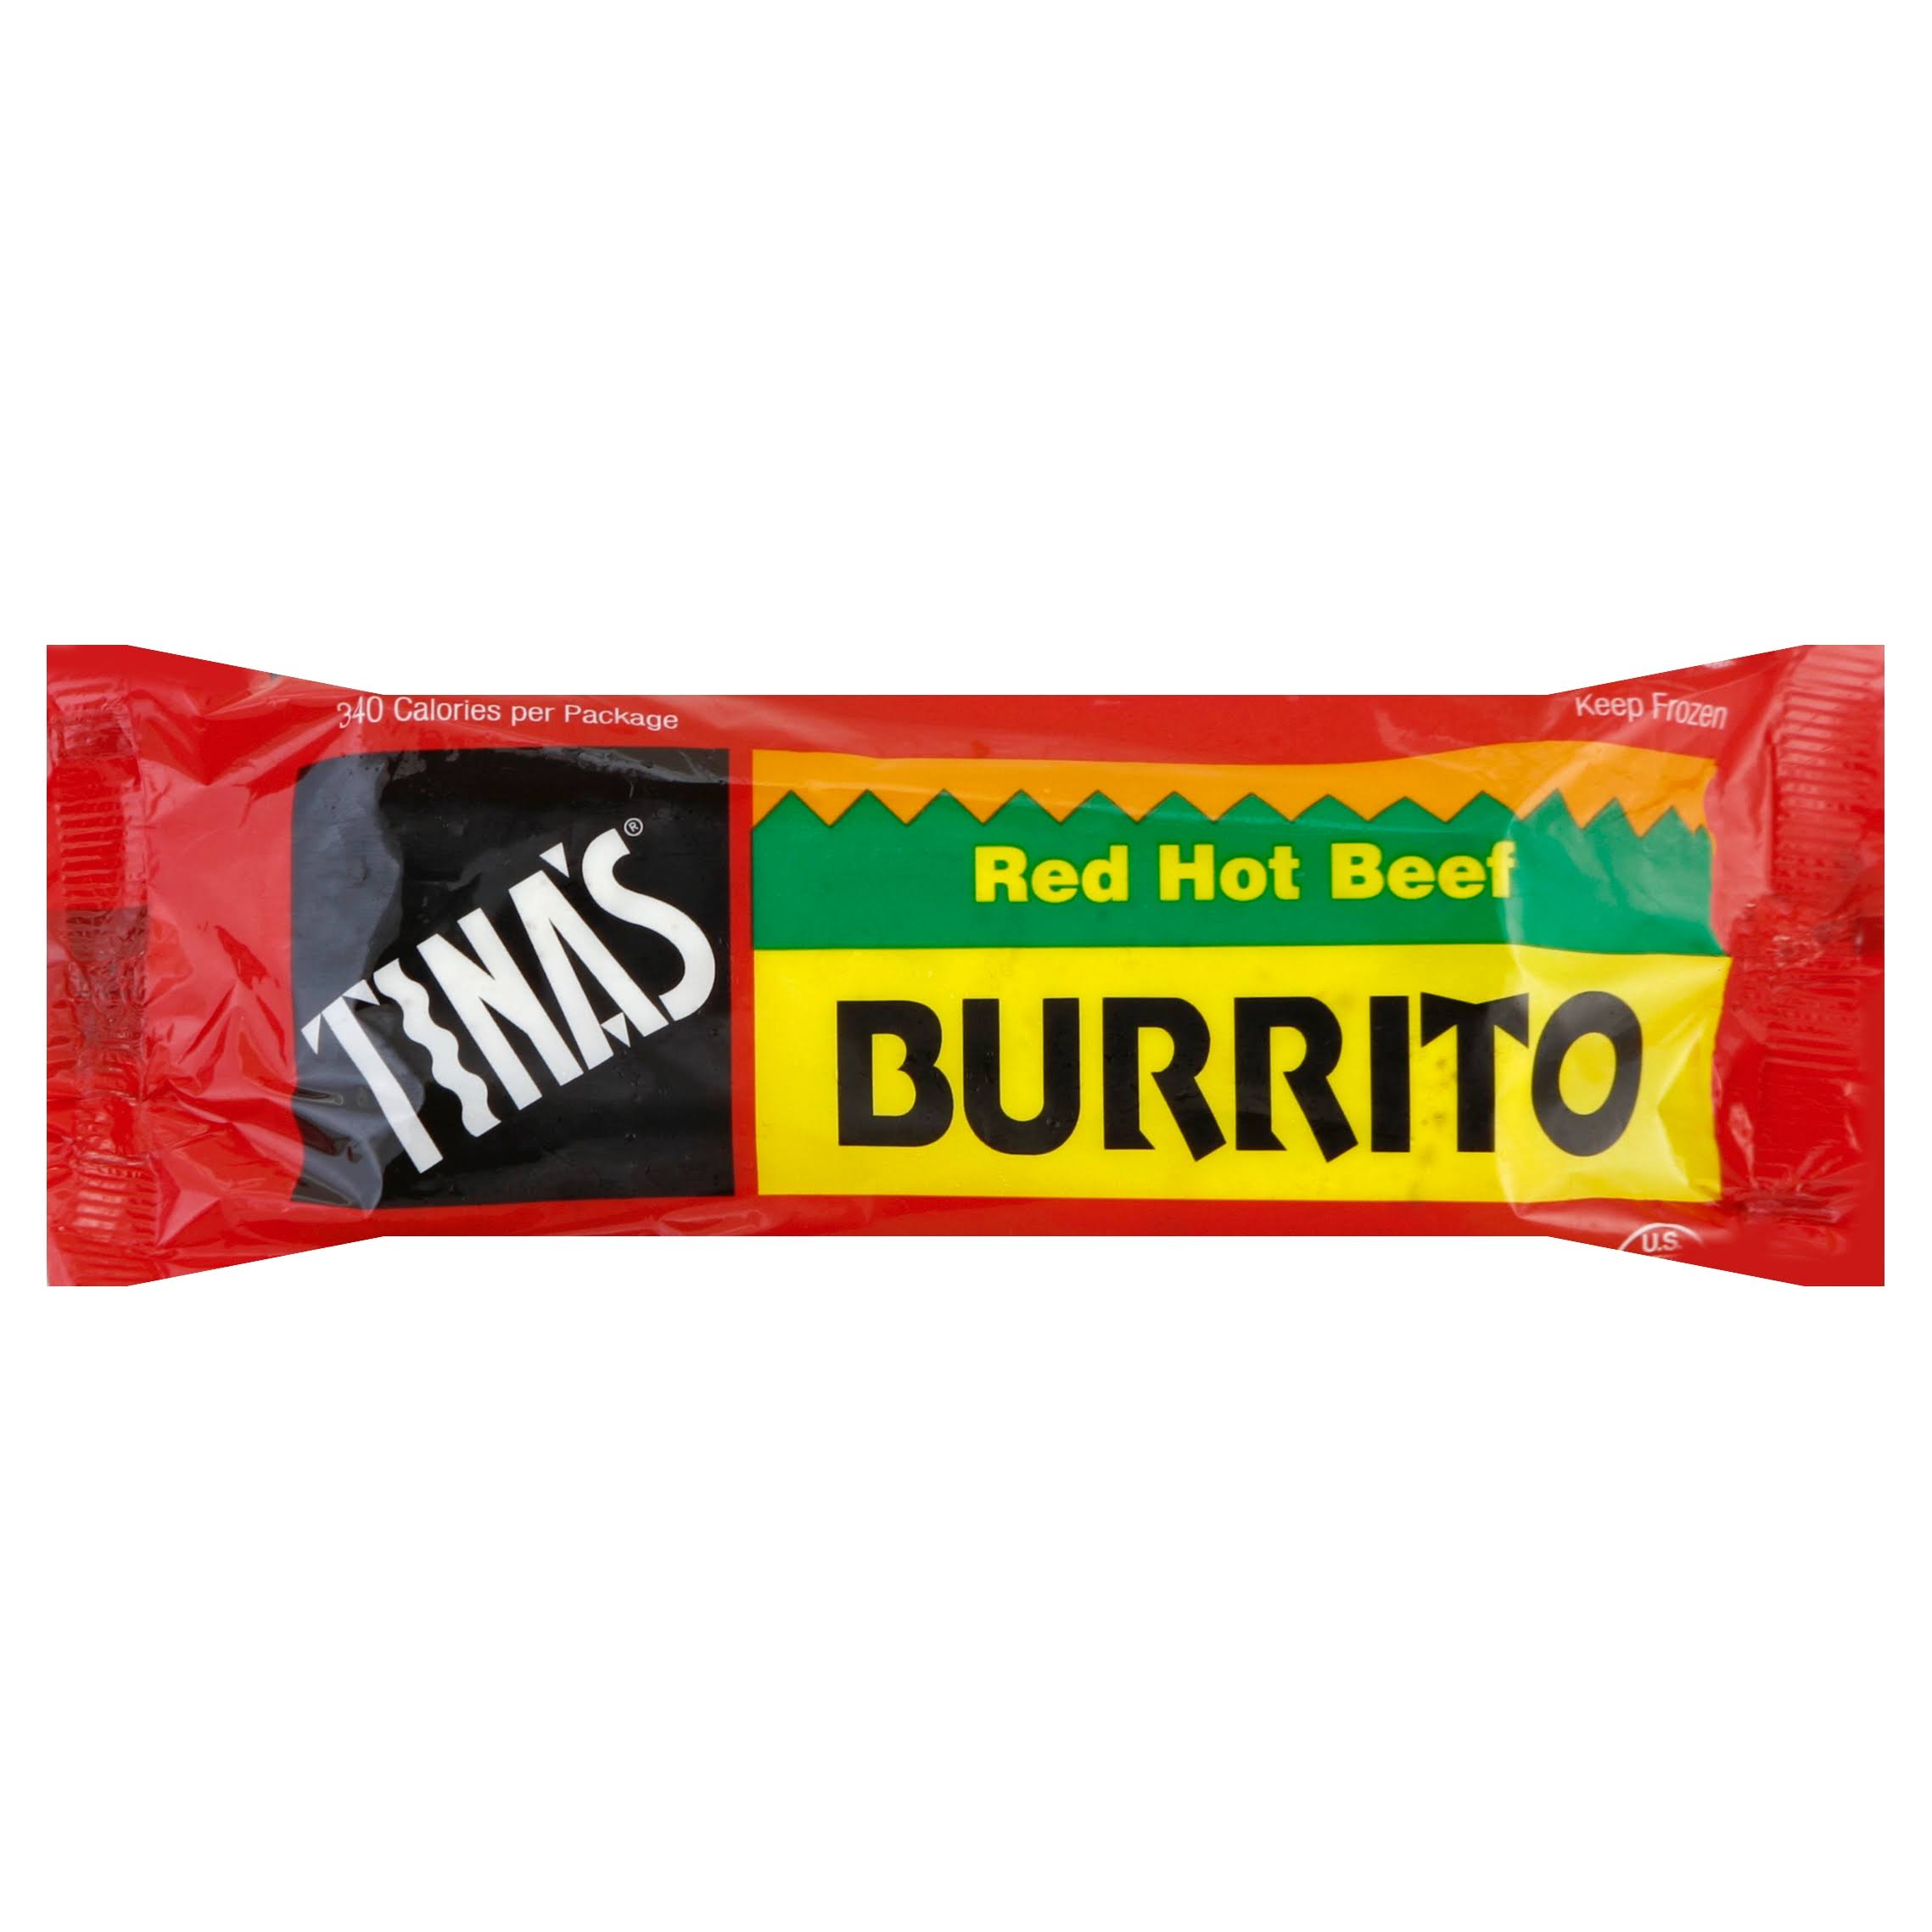 Tina's Burrito - Red Hot Beef, 4oz